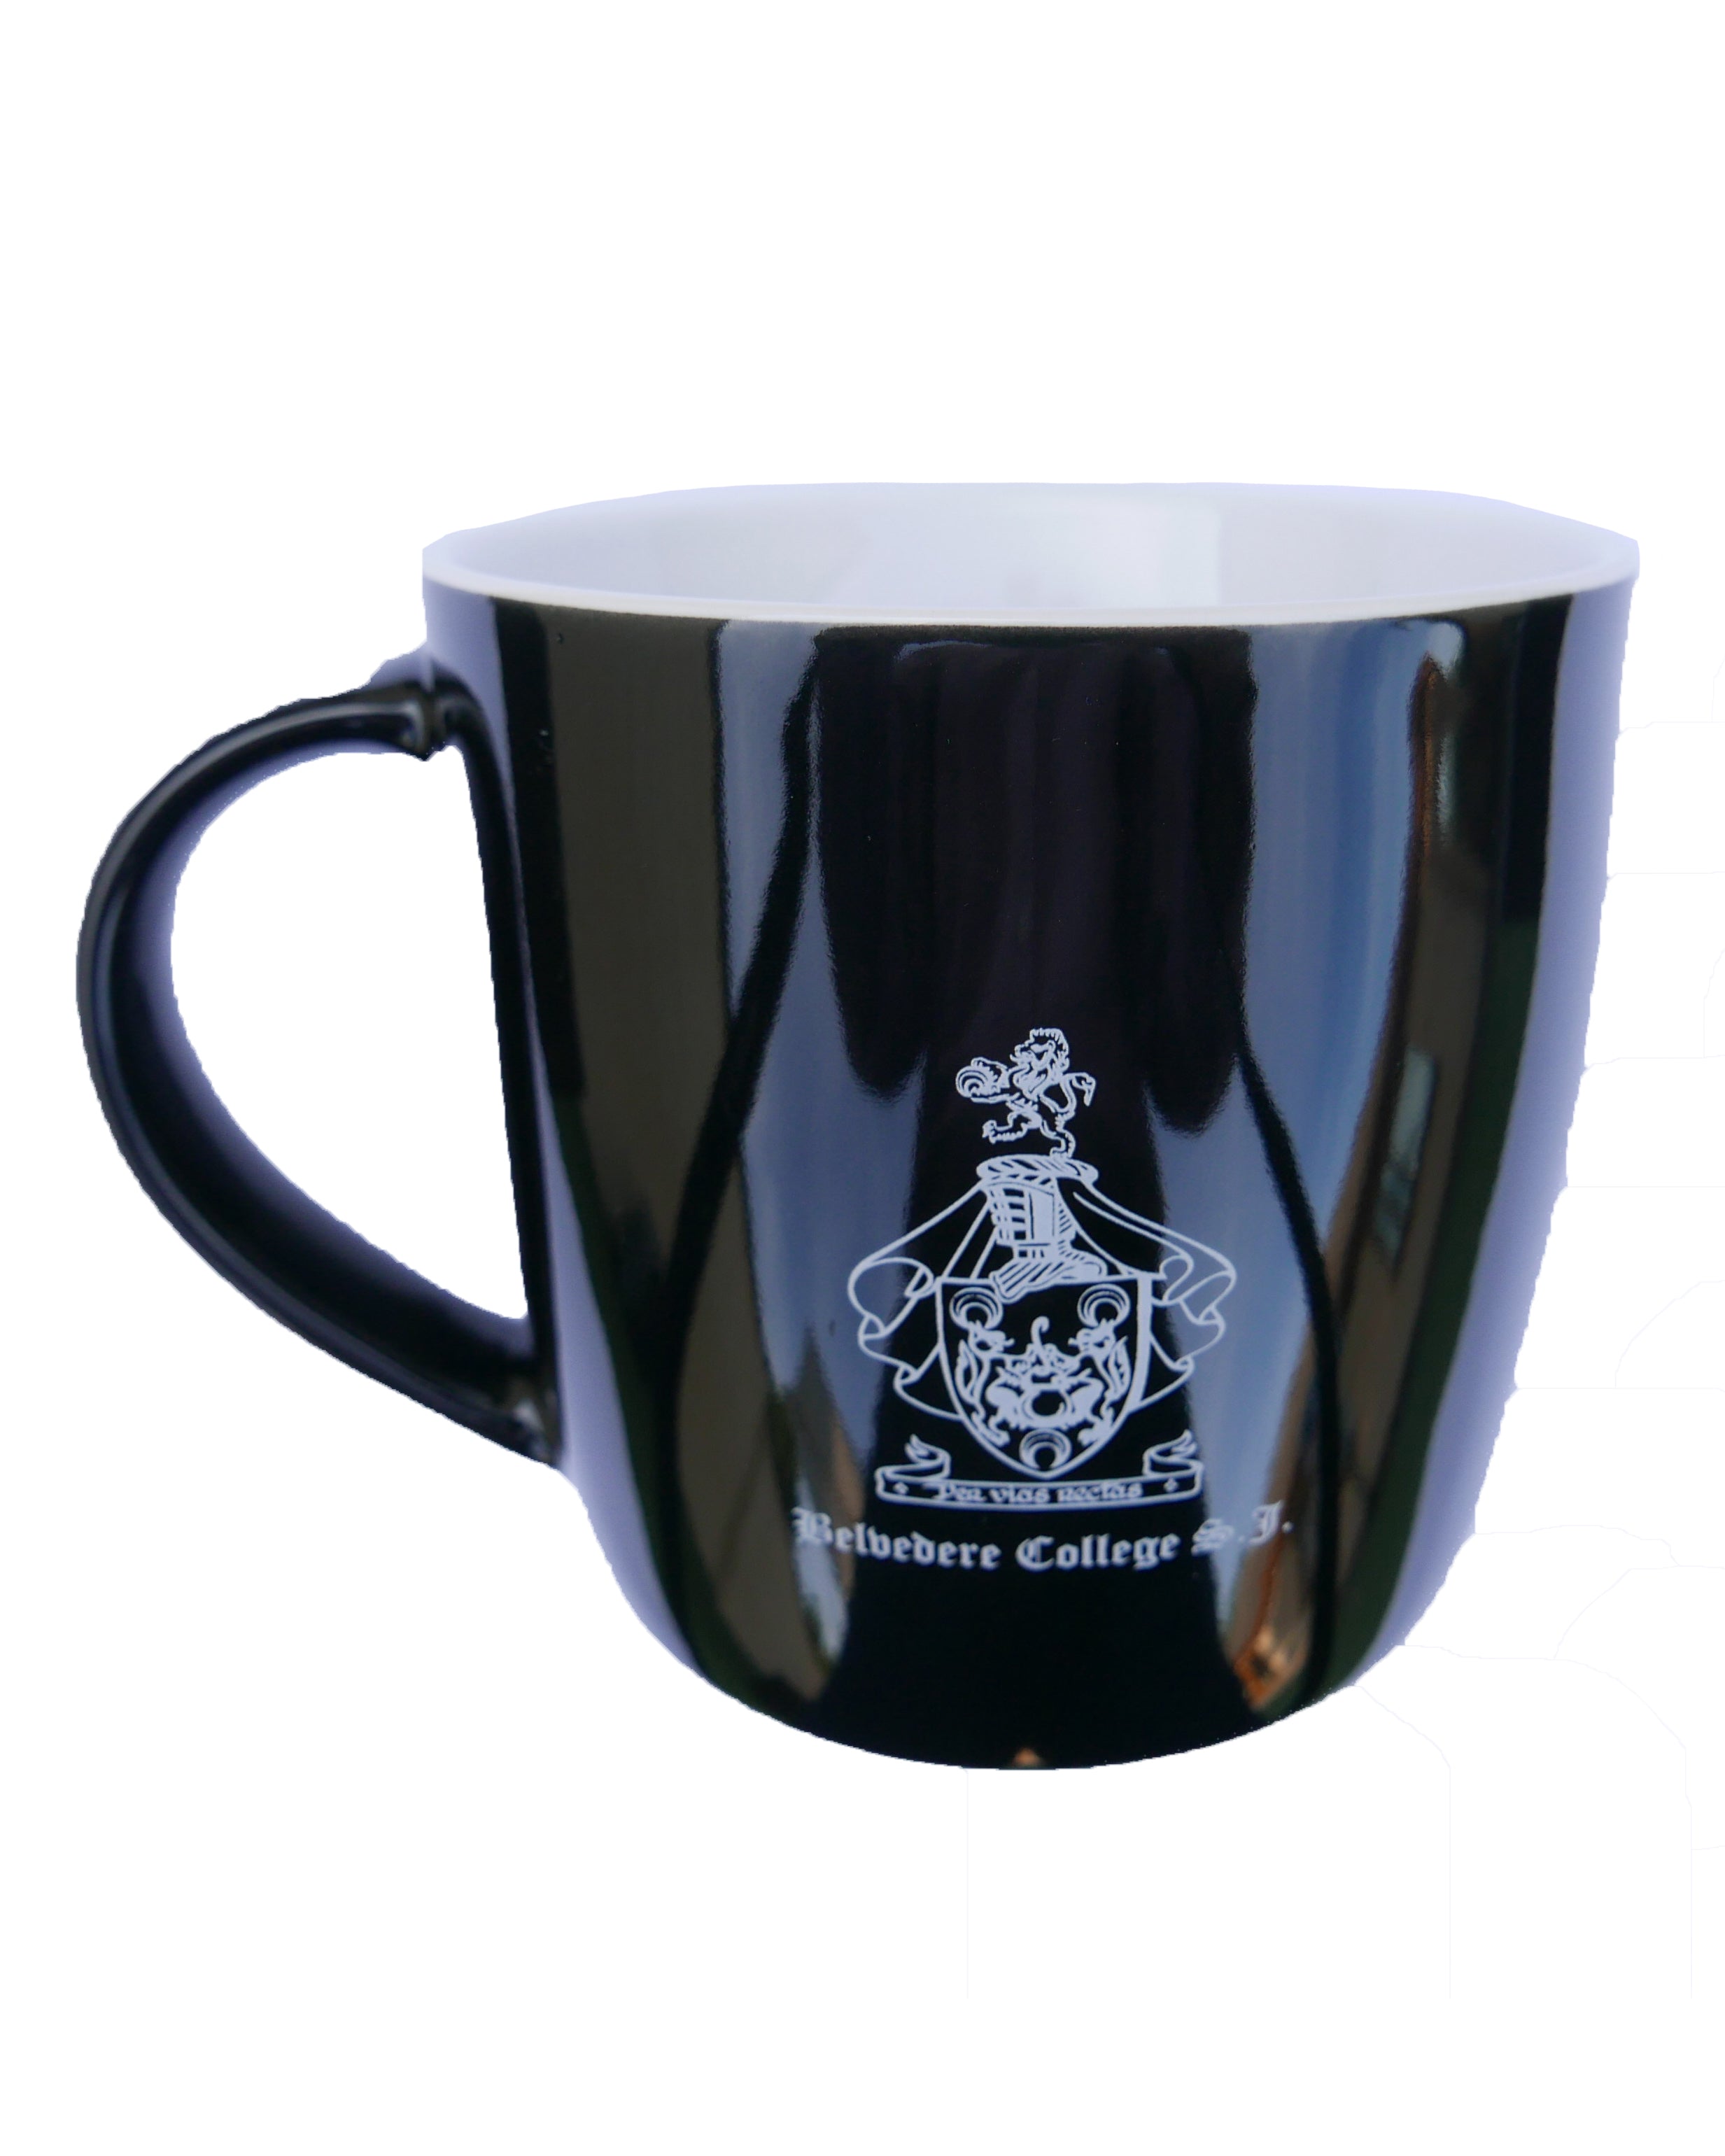 Belvedere College black ceramic mug